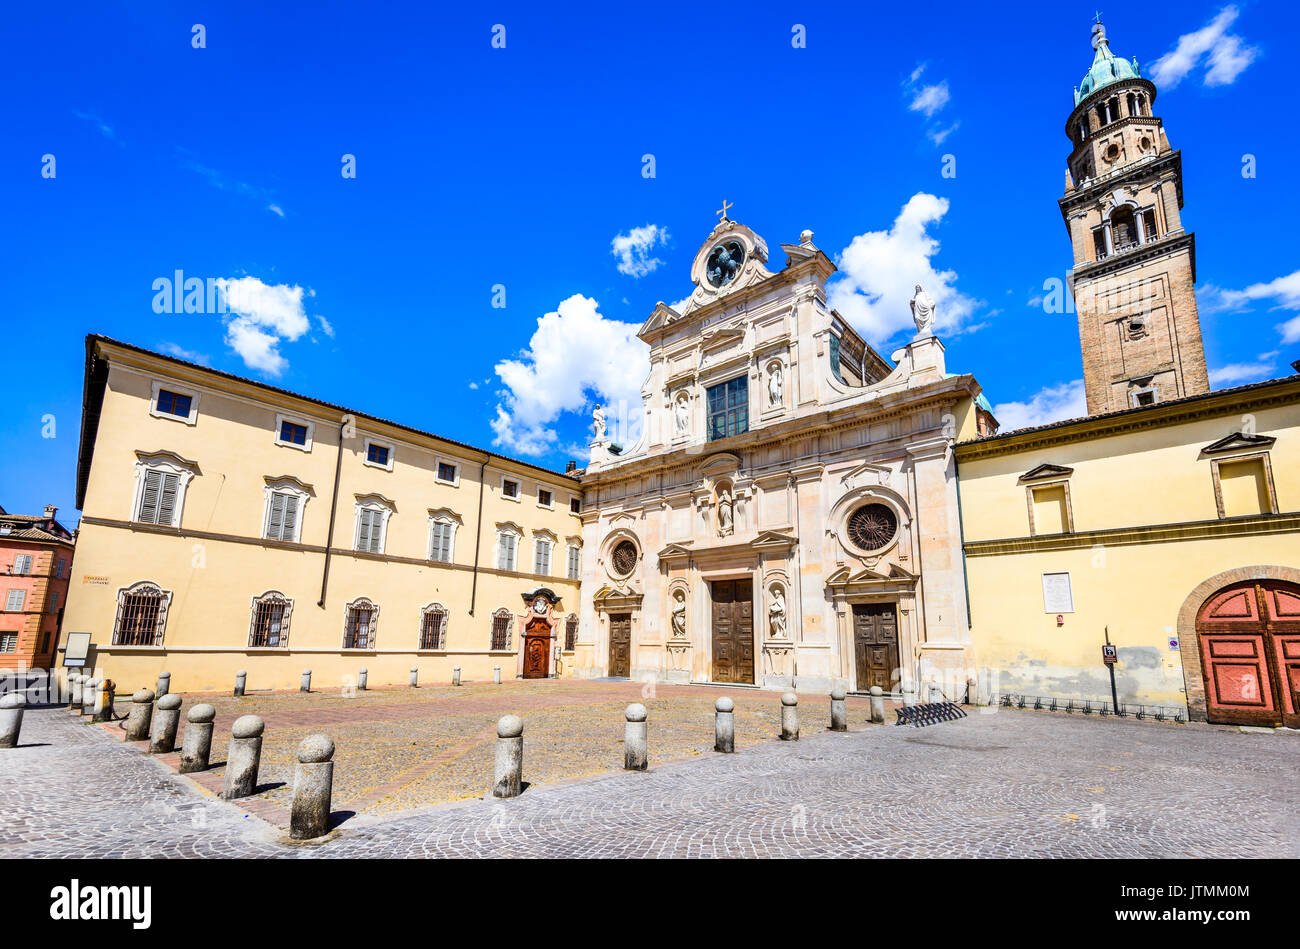 Parma, Italy - Piazzale San Giovanni. San Giovanni Evangelista church with Baroque style facade. Stock Photo